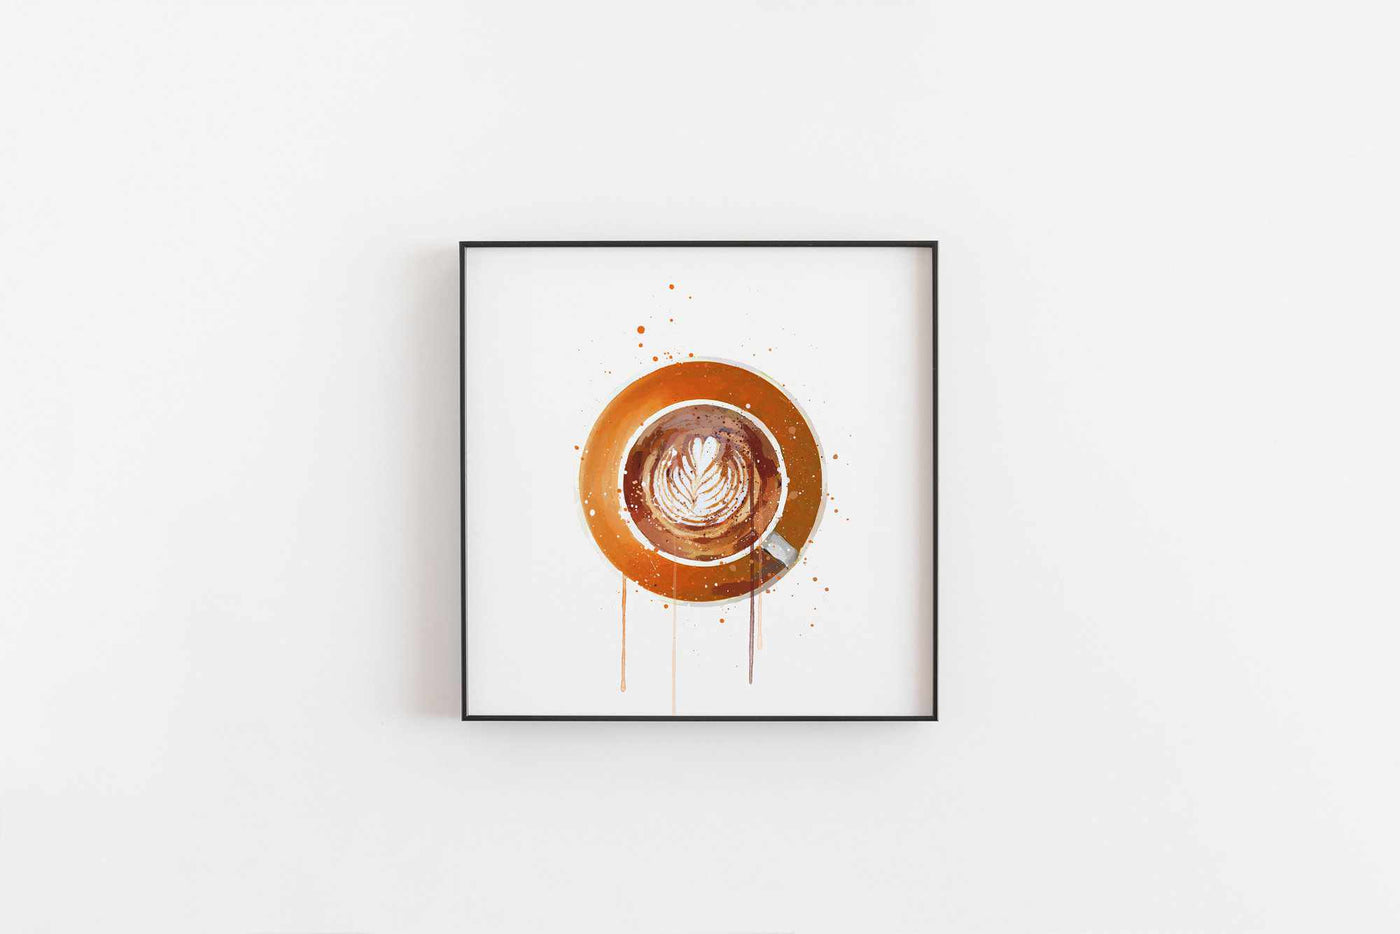 Coffee Wall Art Print ‘Flat White Orange’